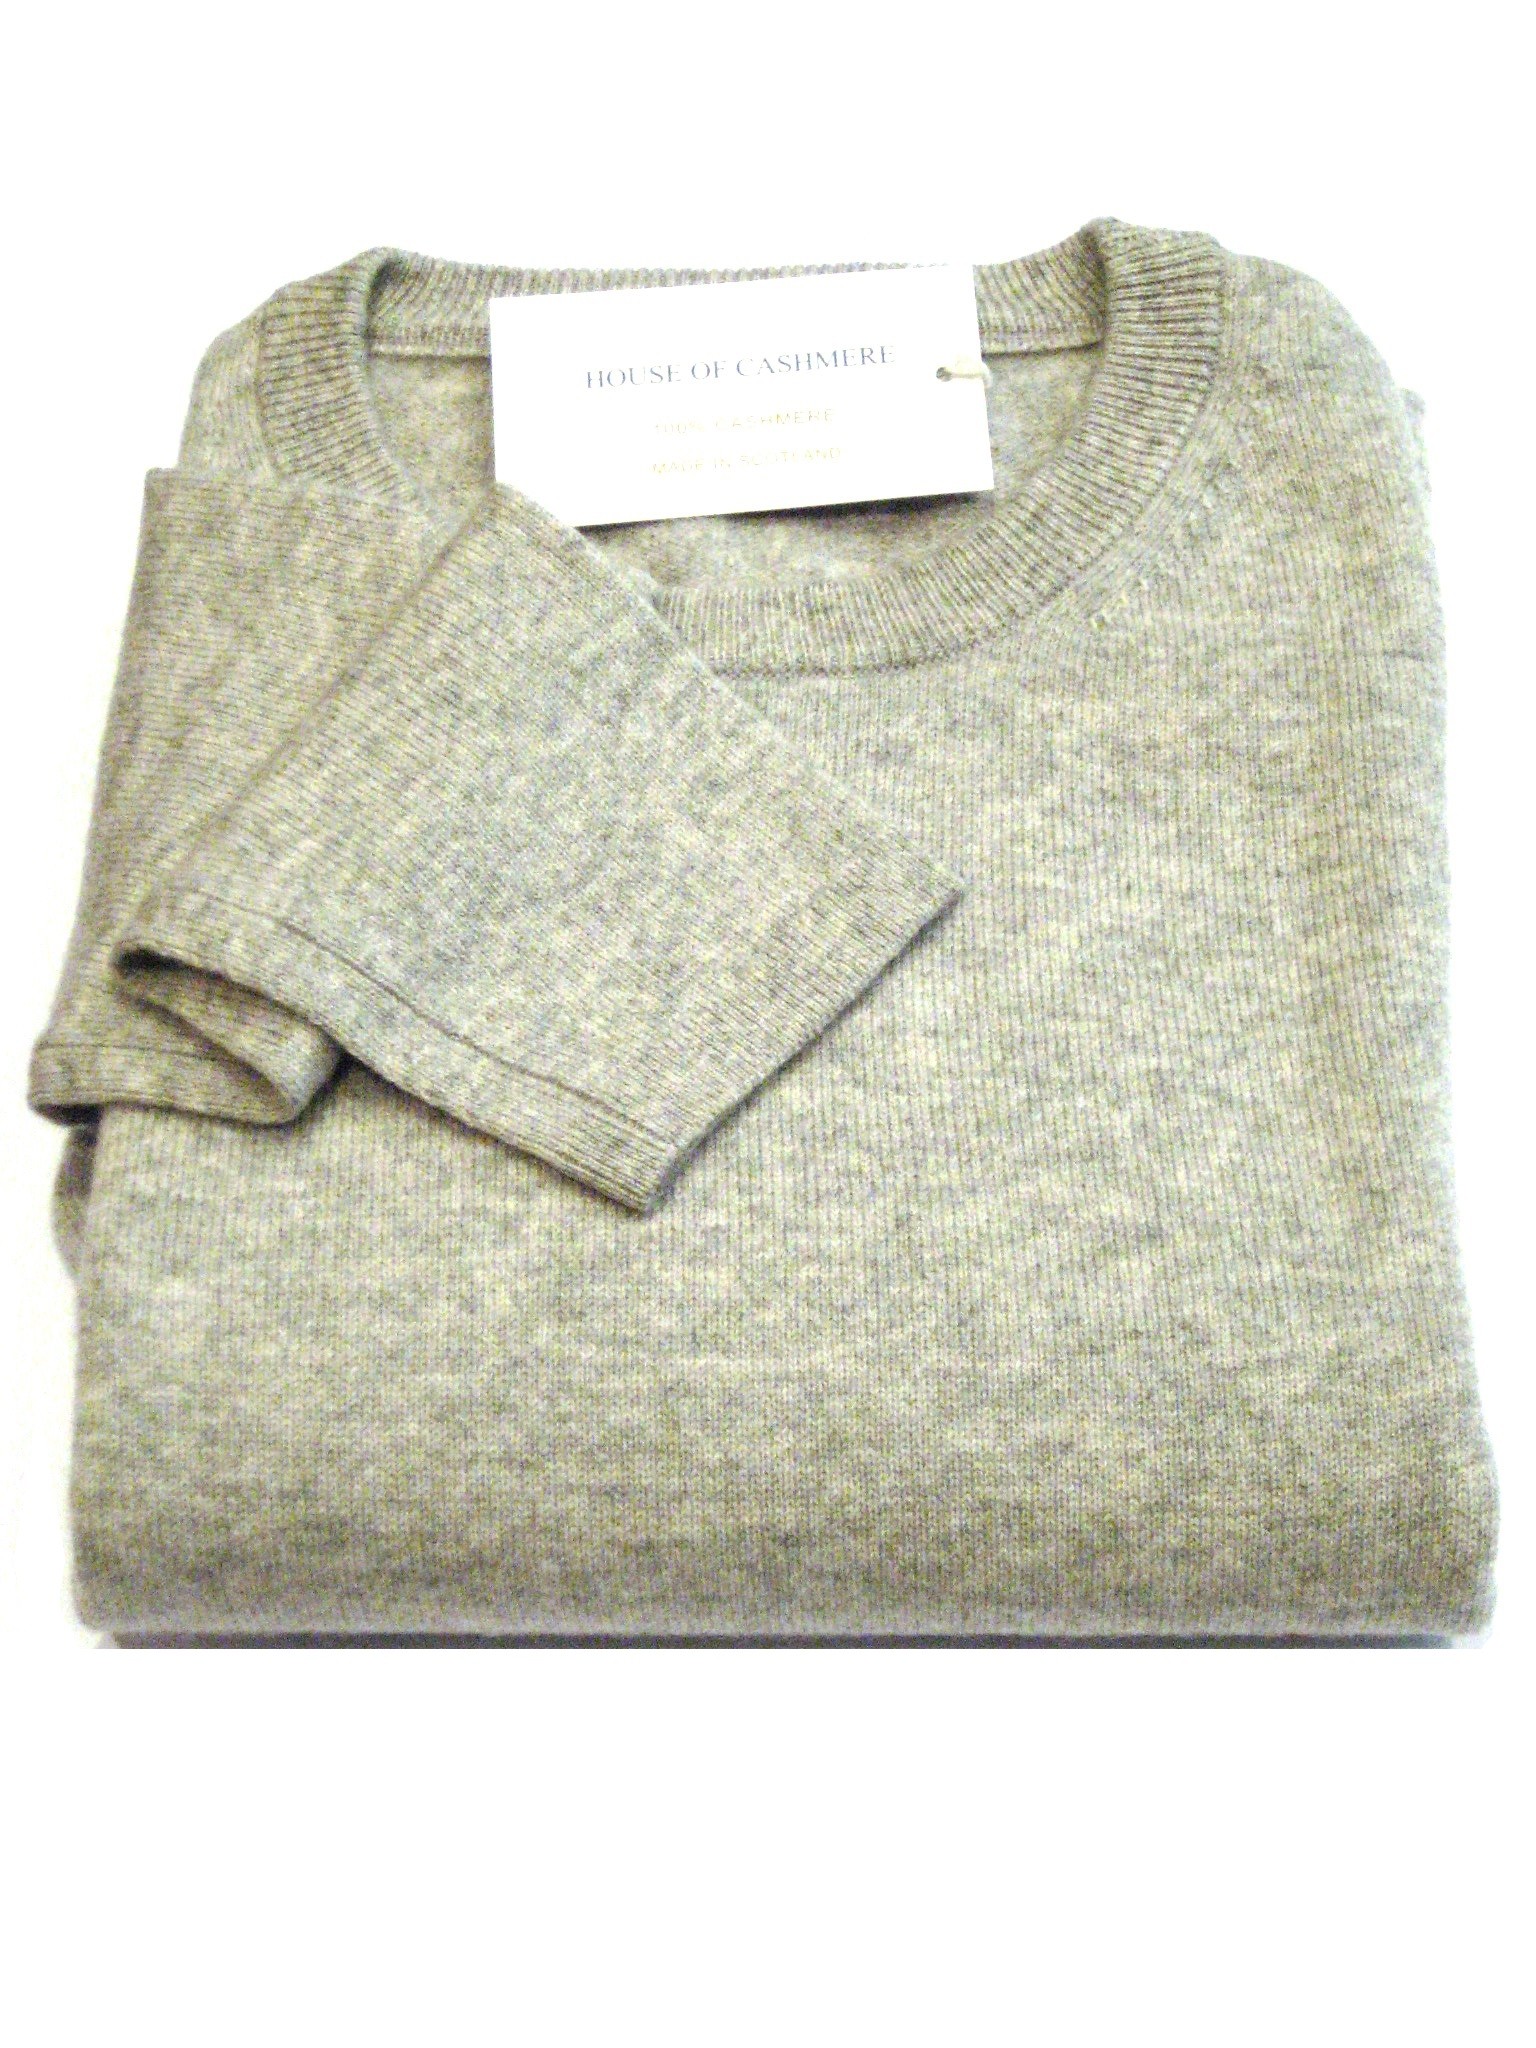 Light Grey Ladies Crew Sweater - 100% Cashmere Made in Scotland